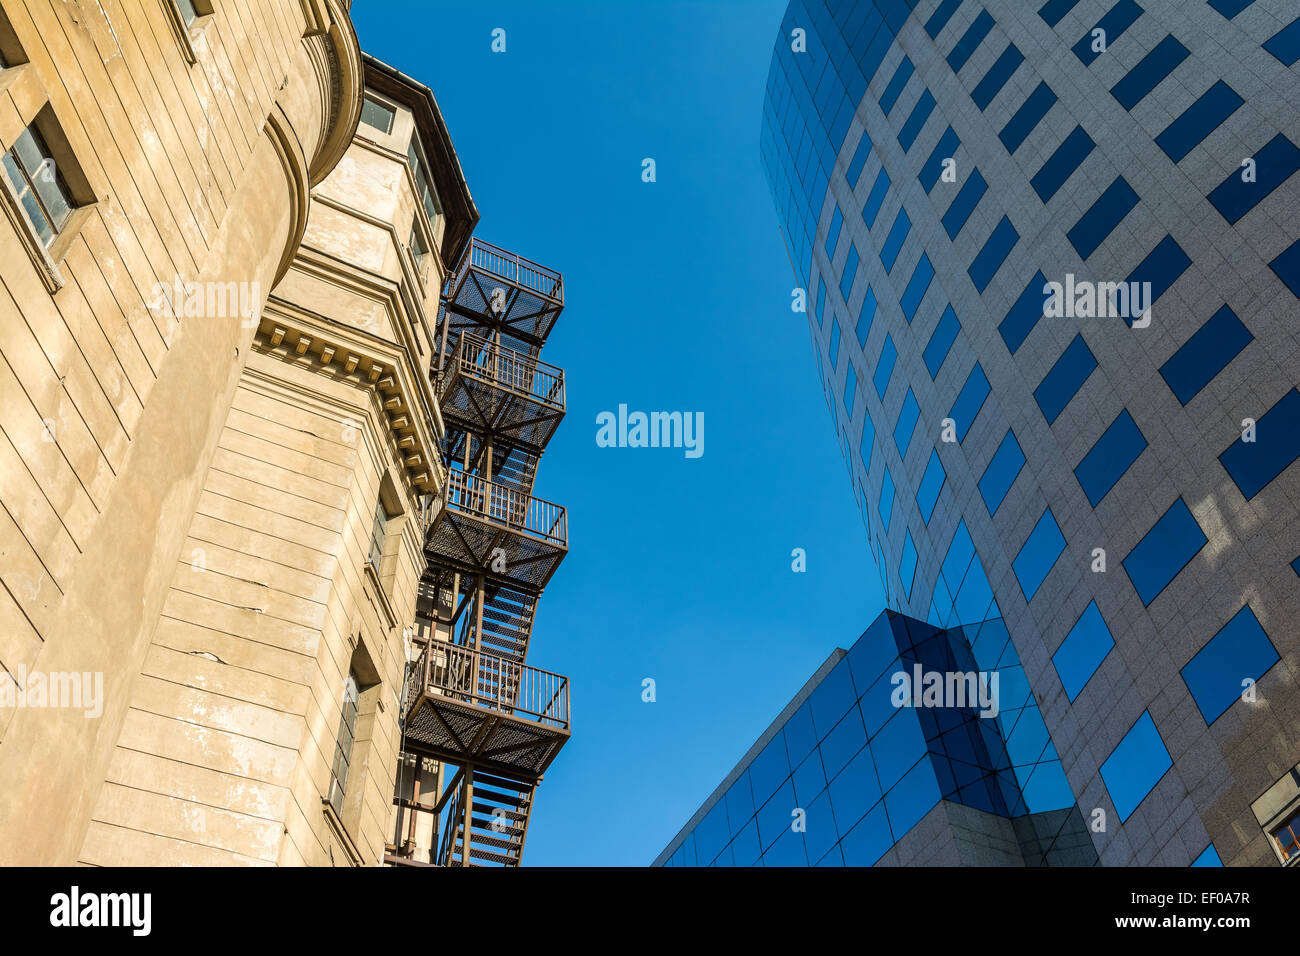 Metall Feuerleiter Treppe im Altbau Fassade Stockfoto